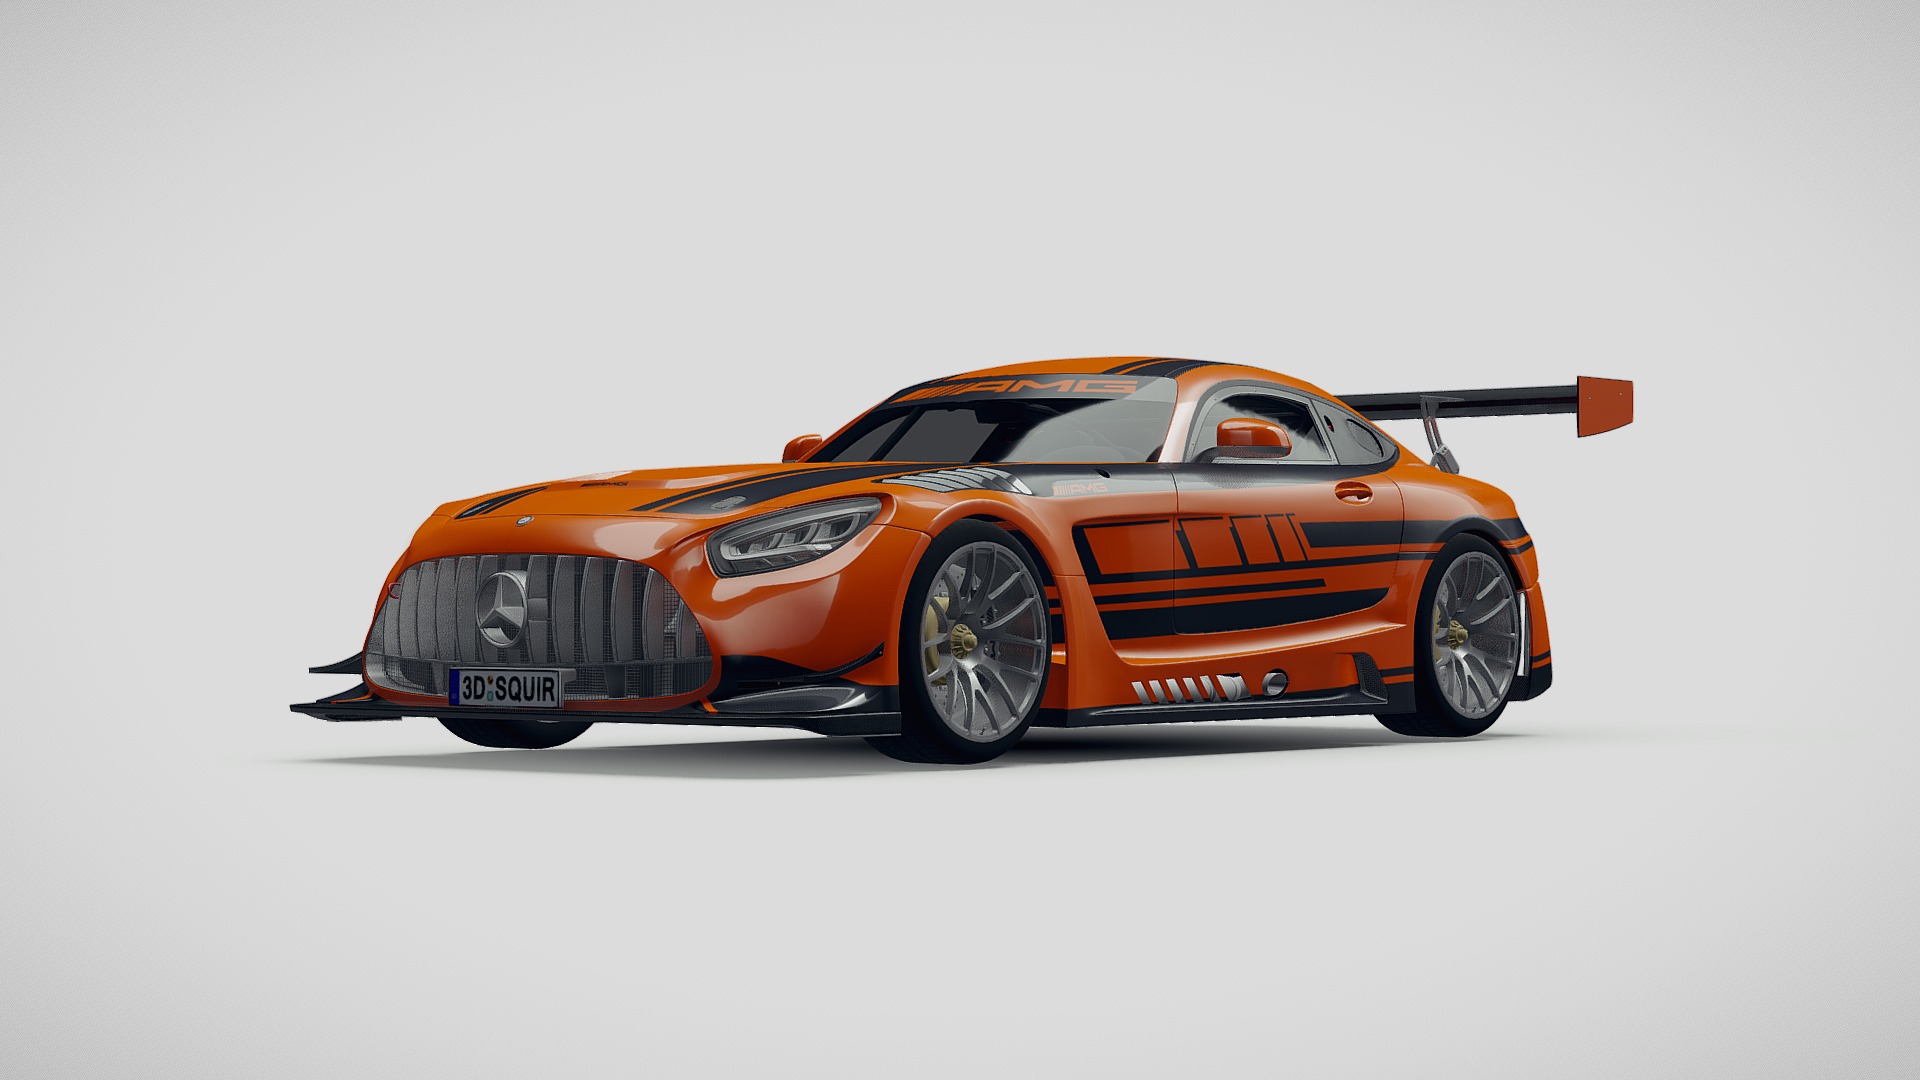 3D model Mercedes AMG GT3 2020 - This is a 3D model of the Mercedes AMG GT3 2020. The 3D model is about an orange sports car.